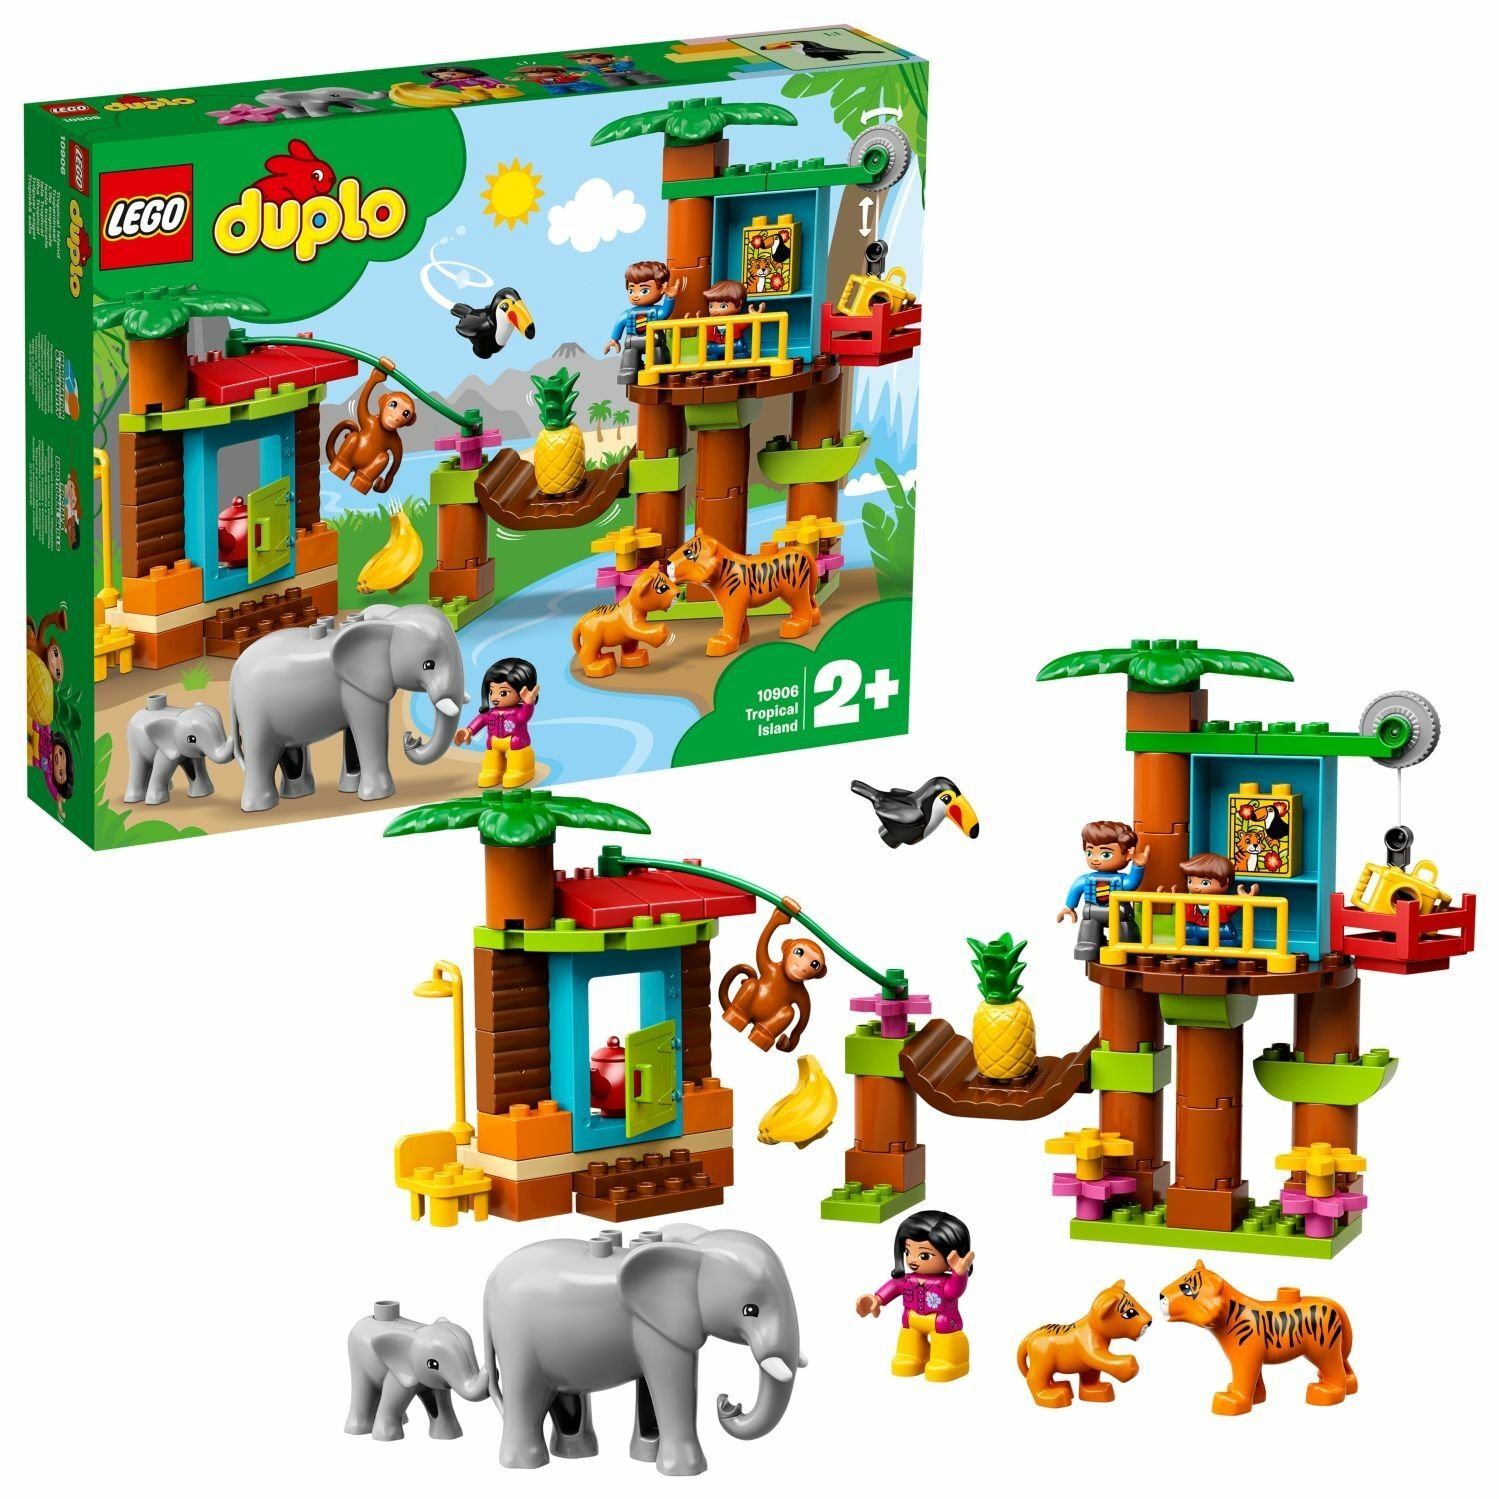 LEGO DUPLO Tropicals Island Playset - 10906